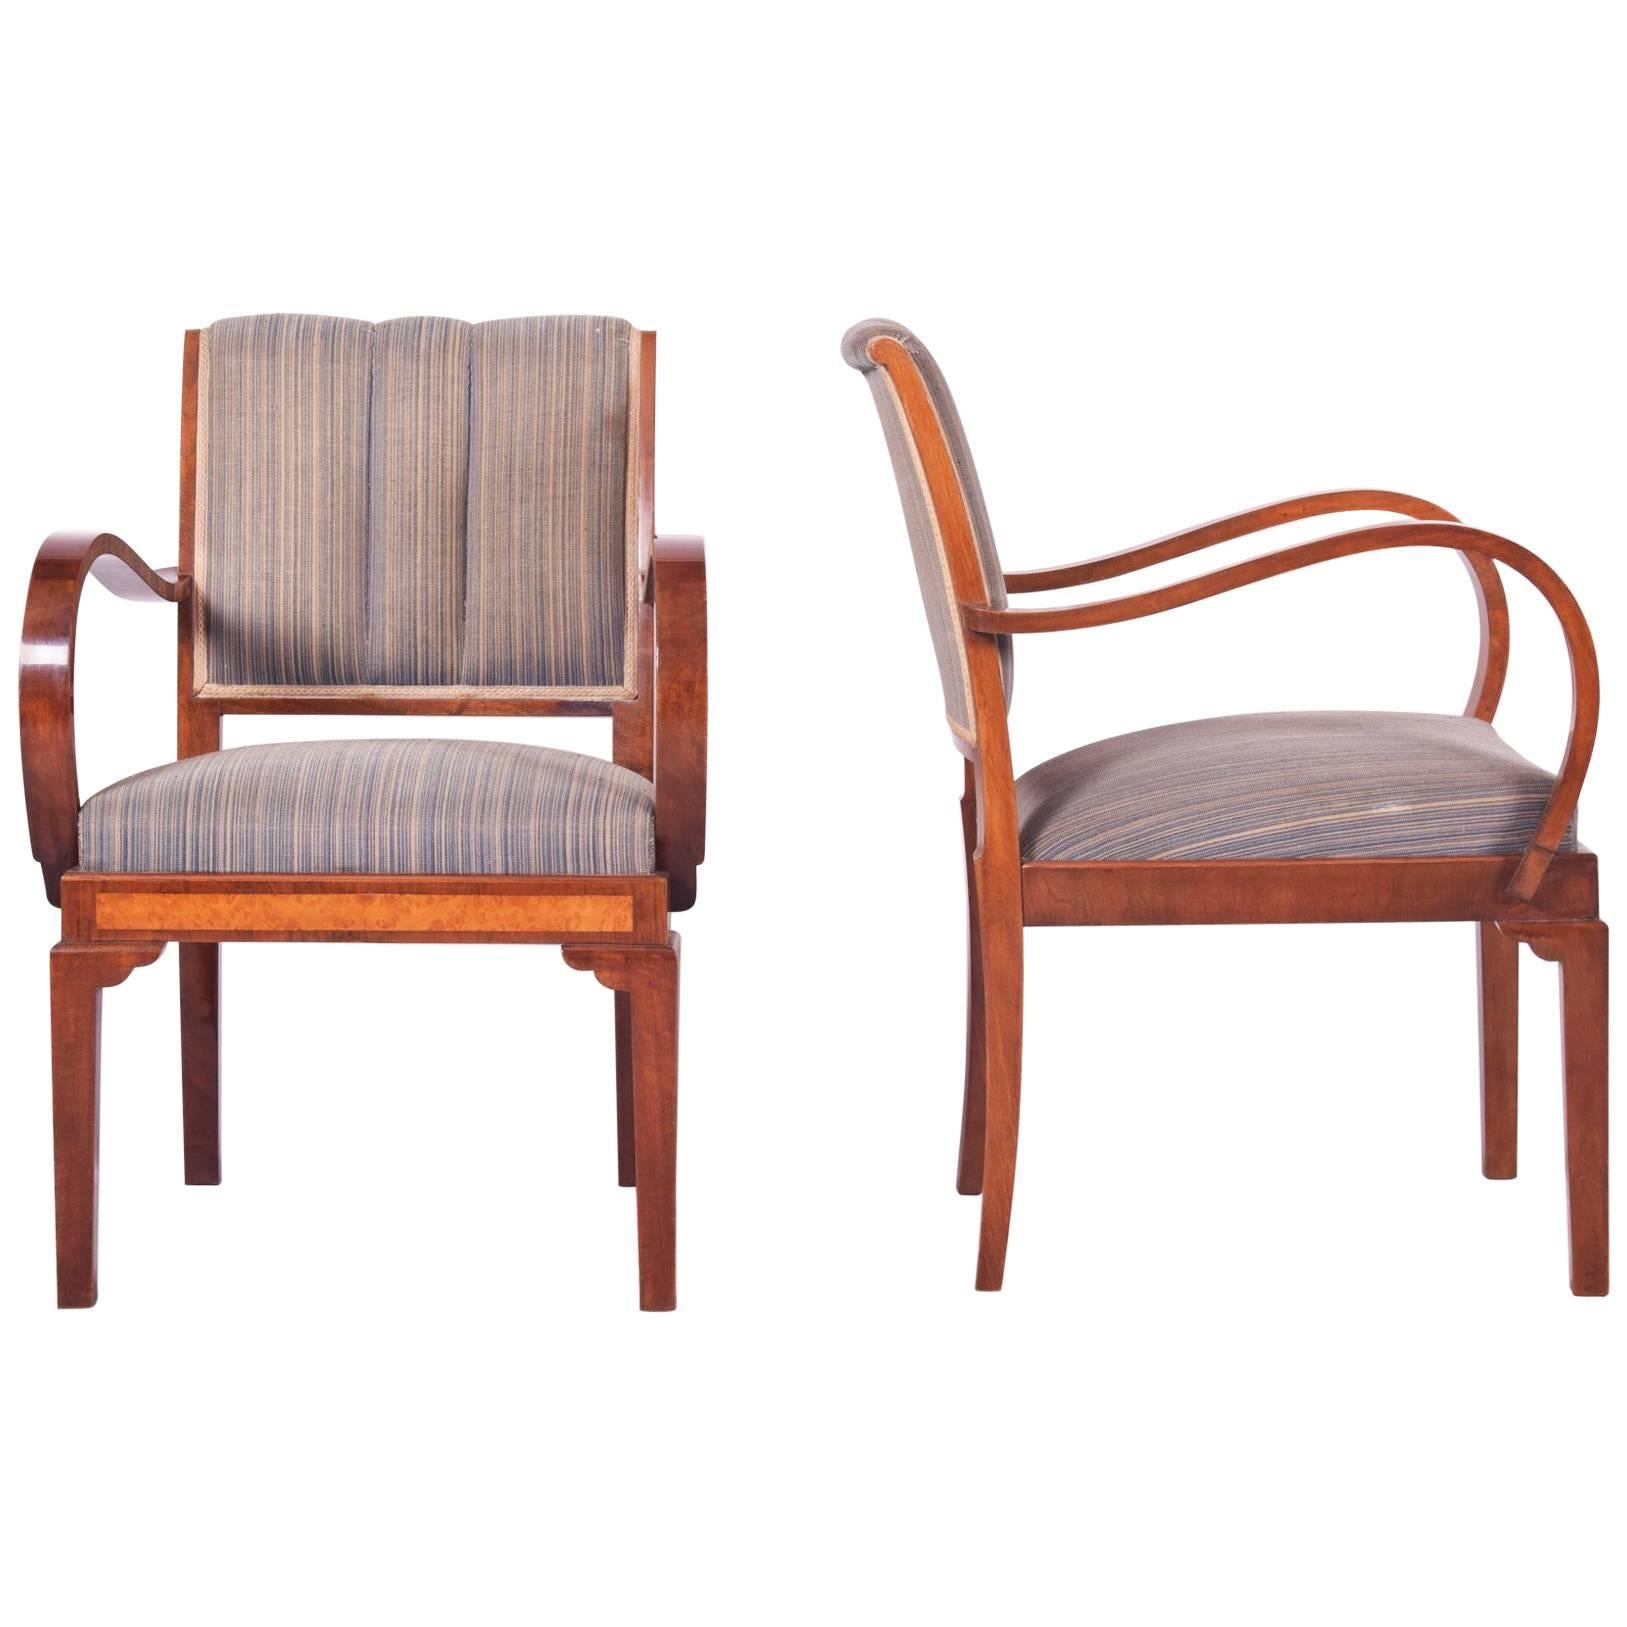 Restored Pair of Art Deco Armchairs, Original Preserved Fabric, Shellac Polish